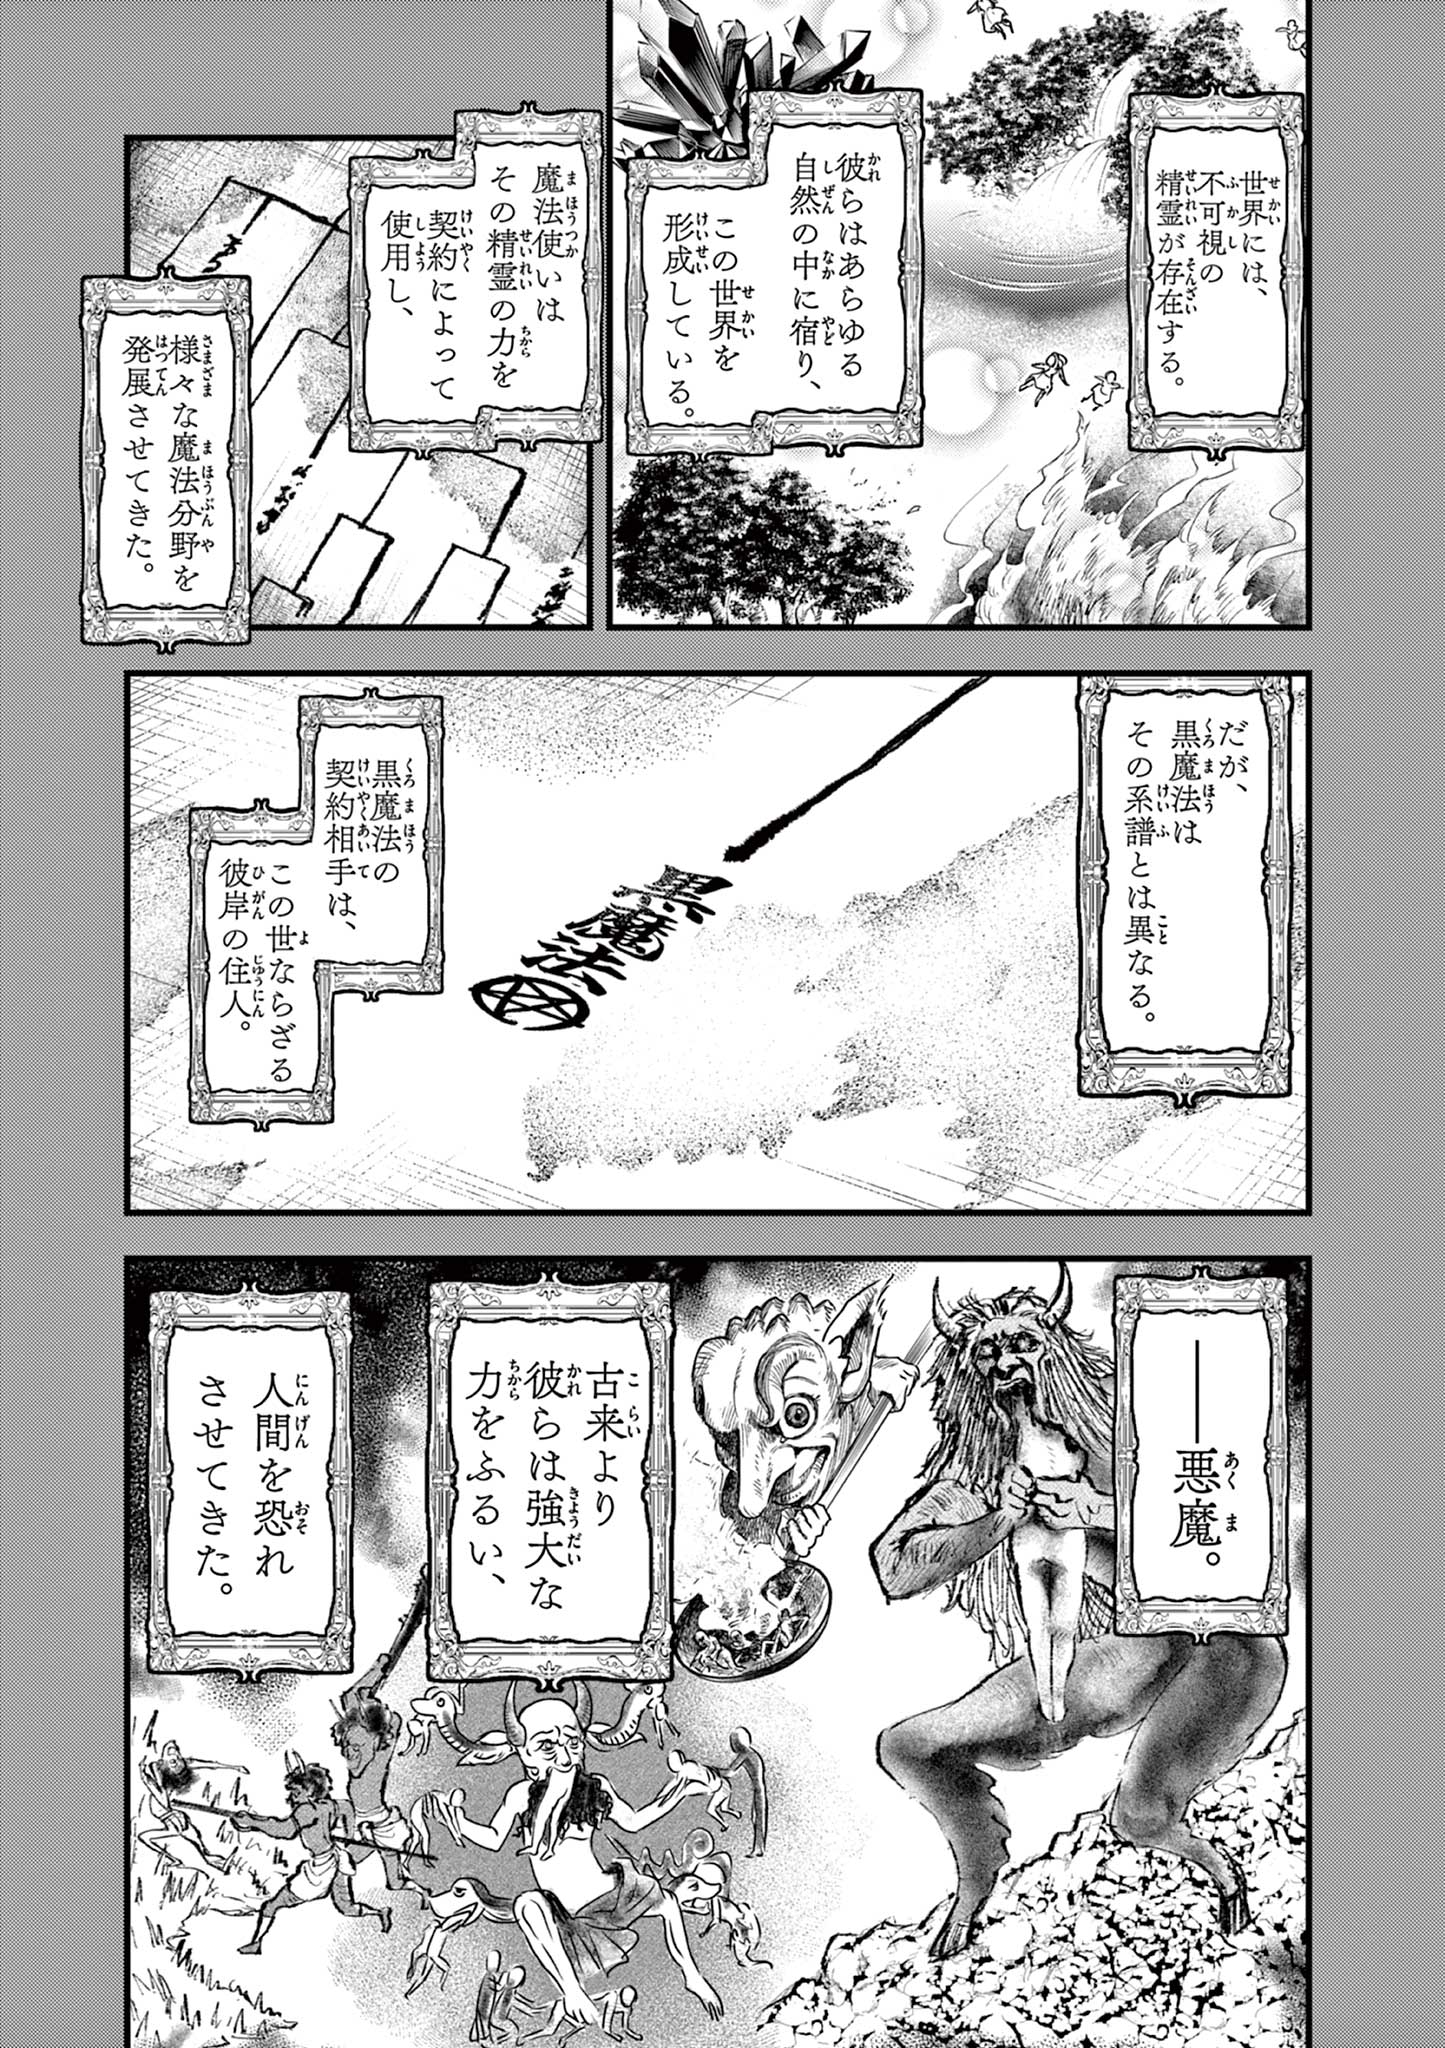 Kuro Mahou Ryou no Sanakunin - Chapter 5 - Page 1